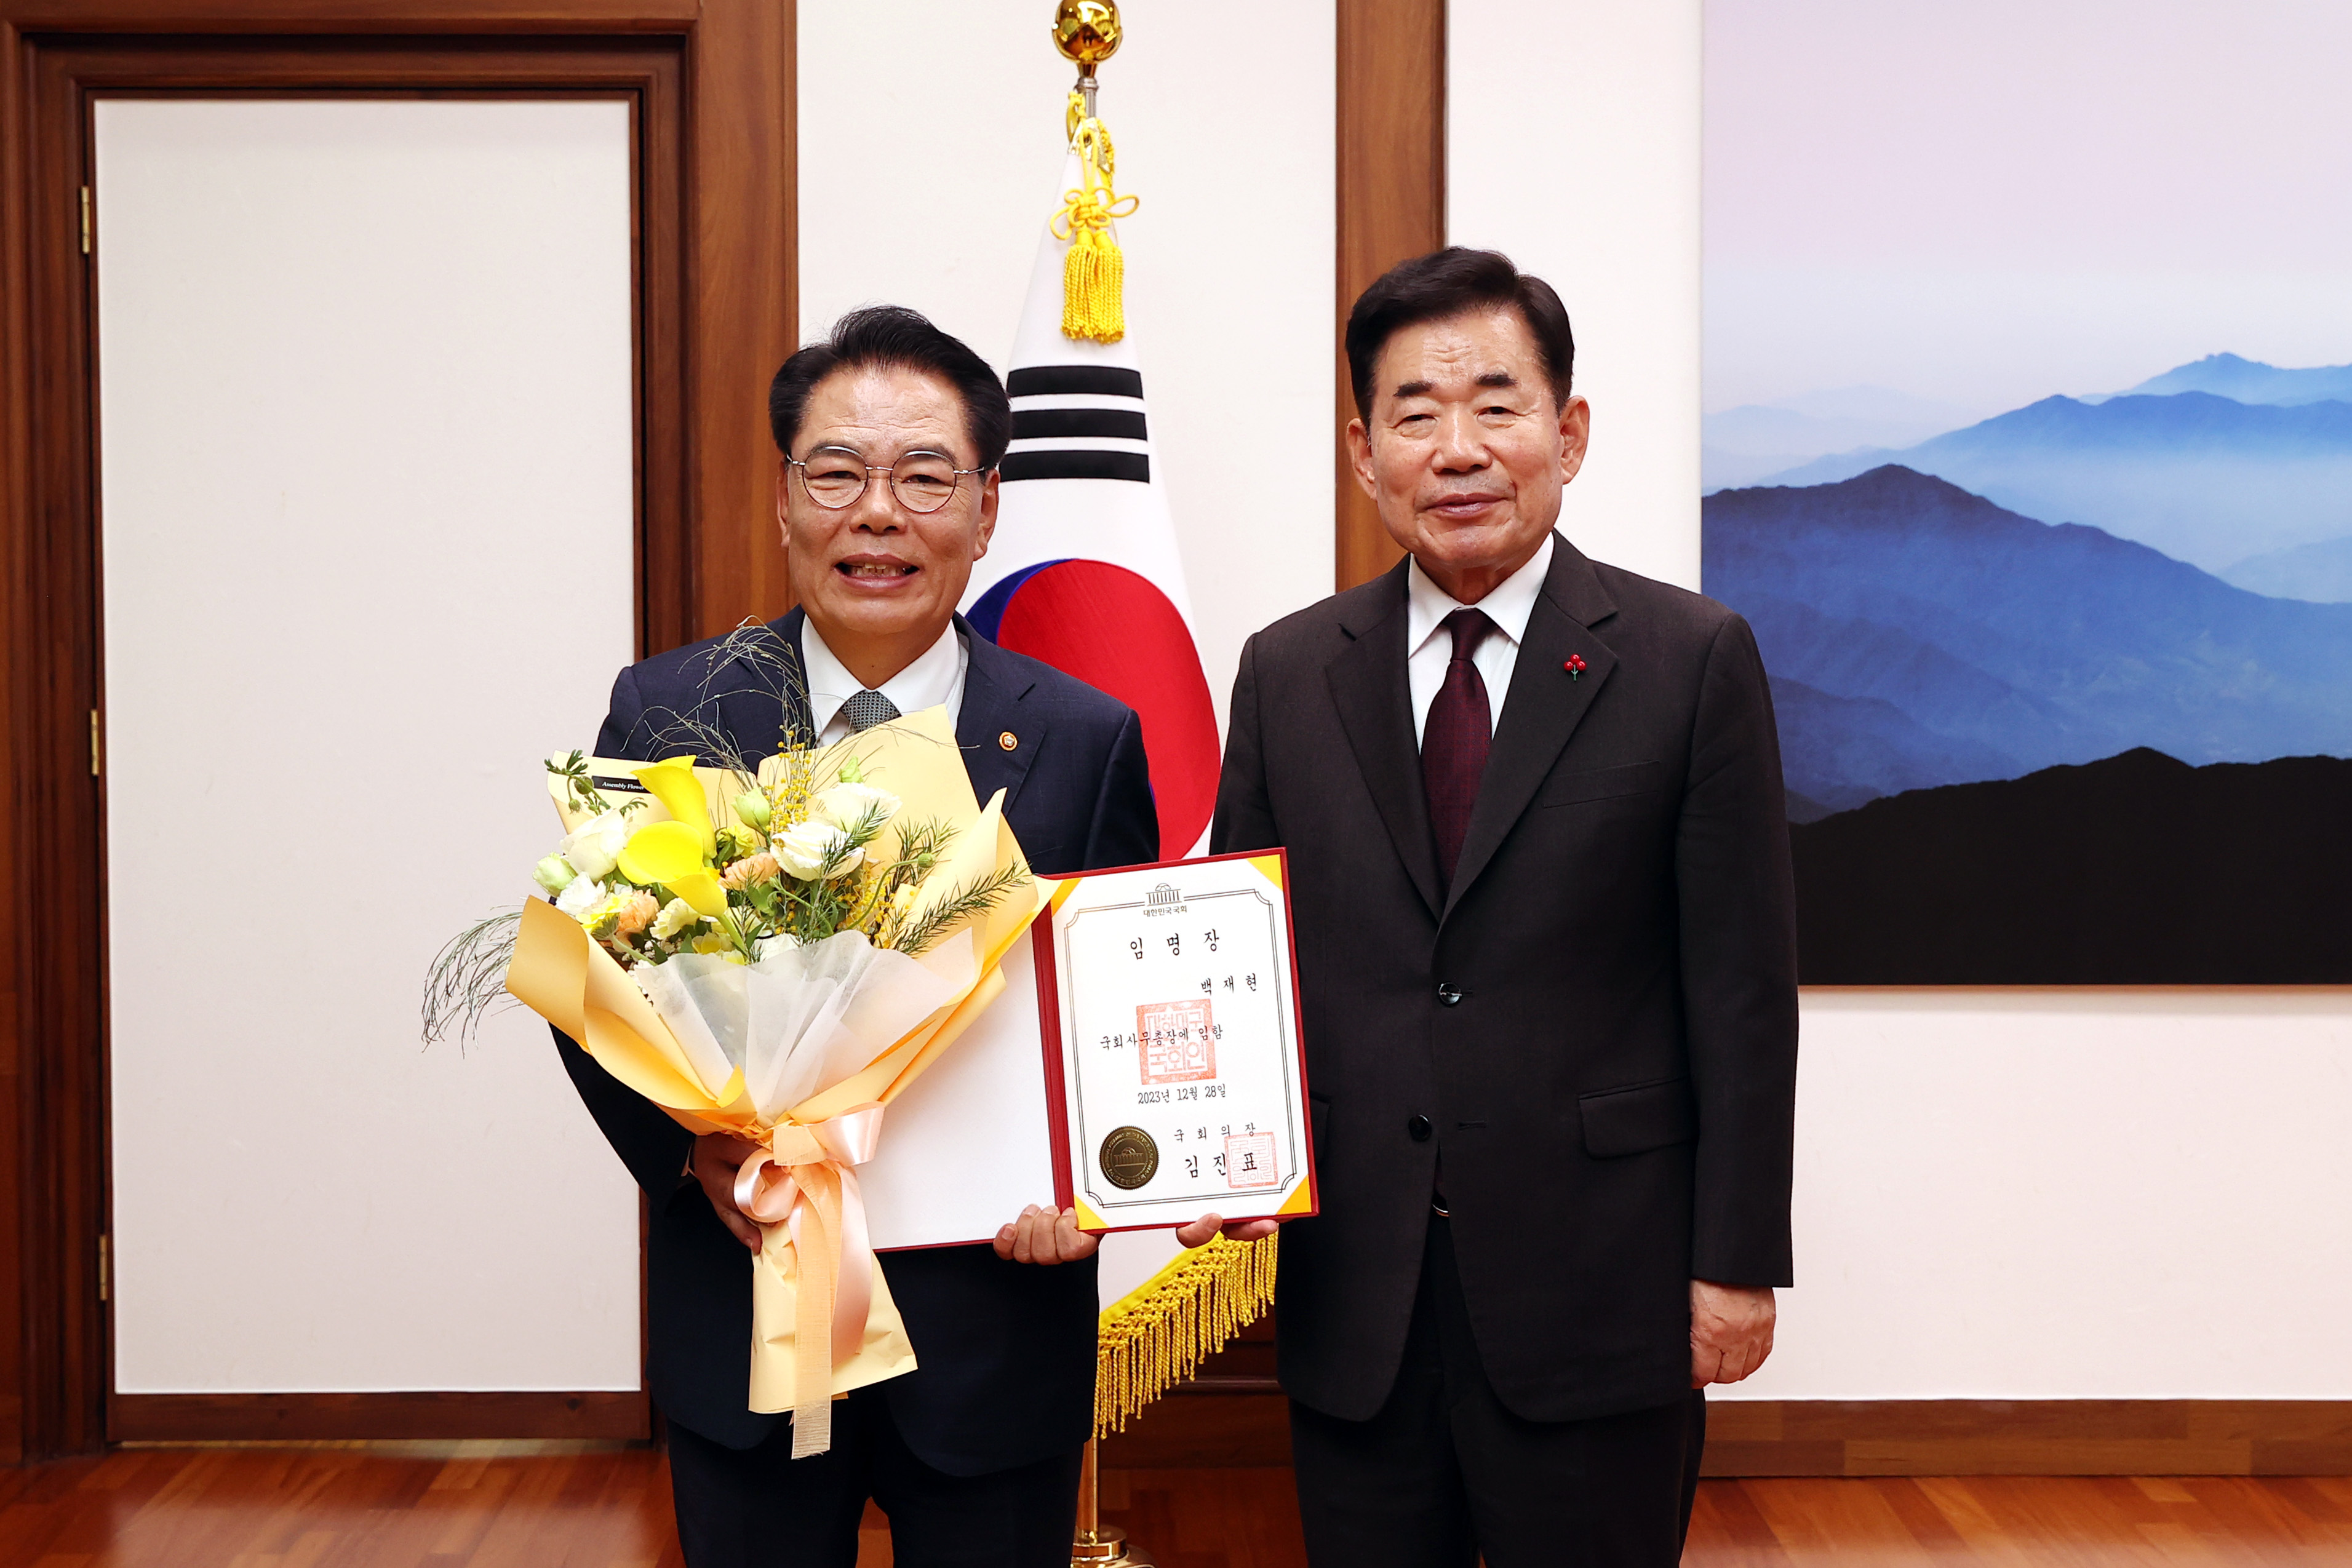 Former Assembly member Baek Jae-hyun sworn in as new National Assembly Secretary General 관련사진 2 보기